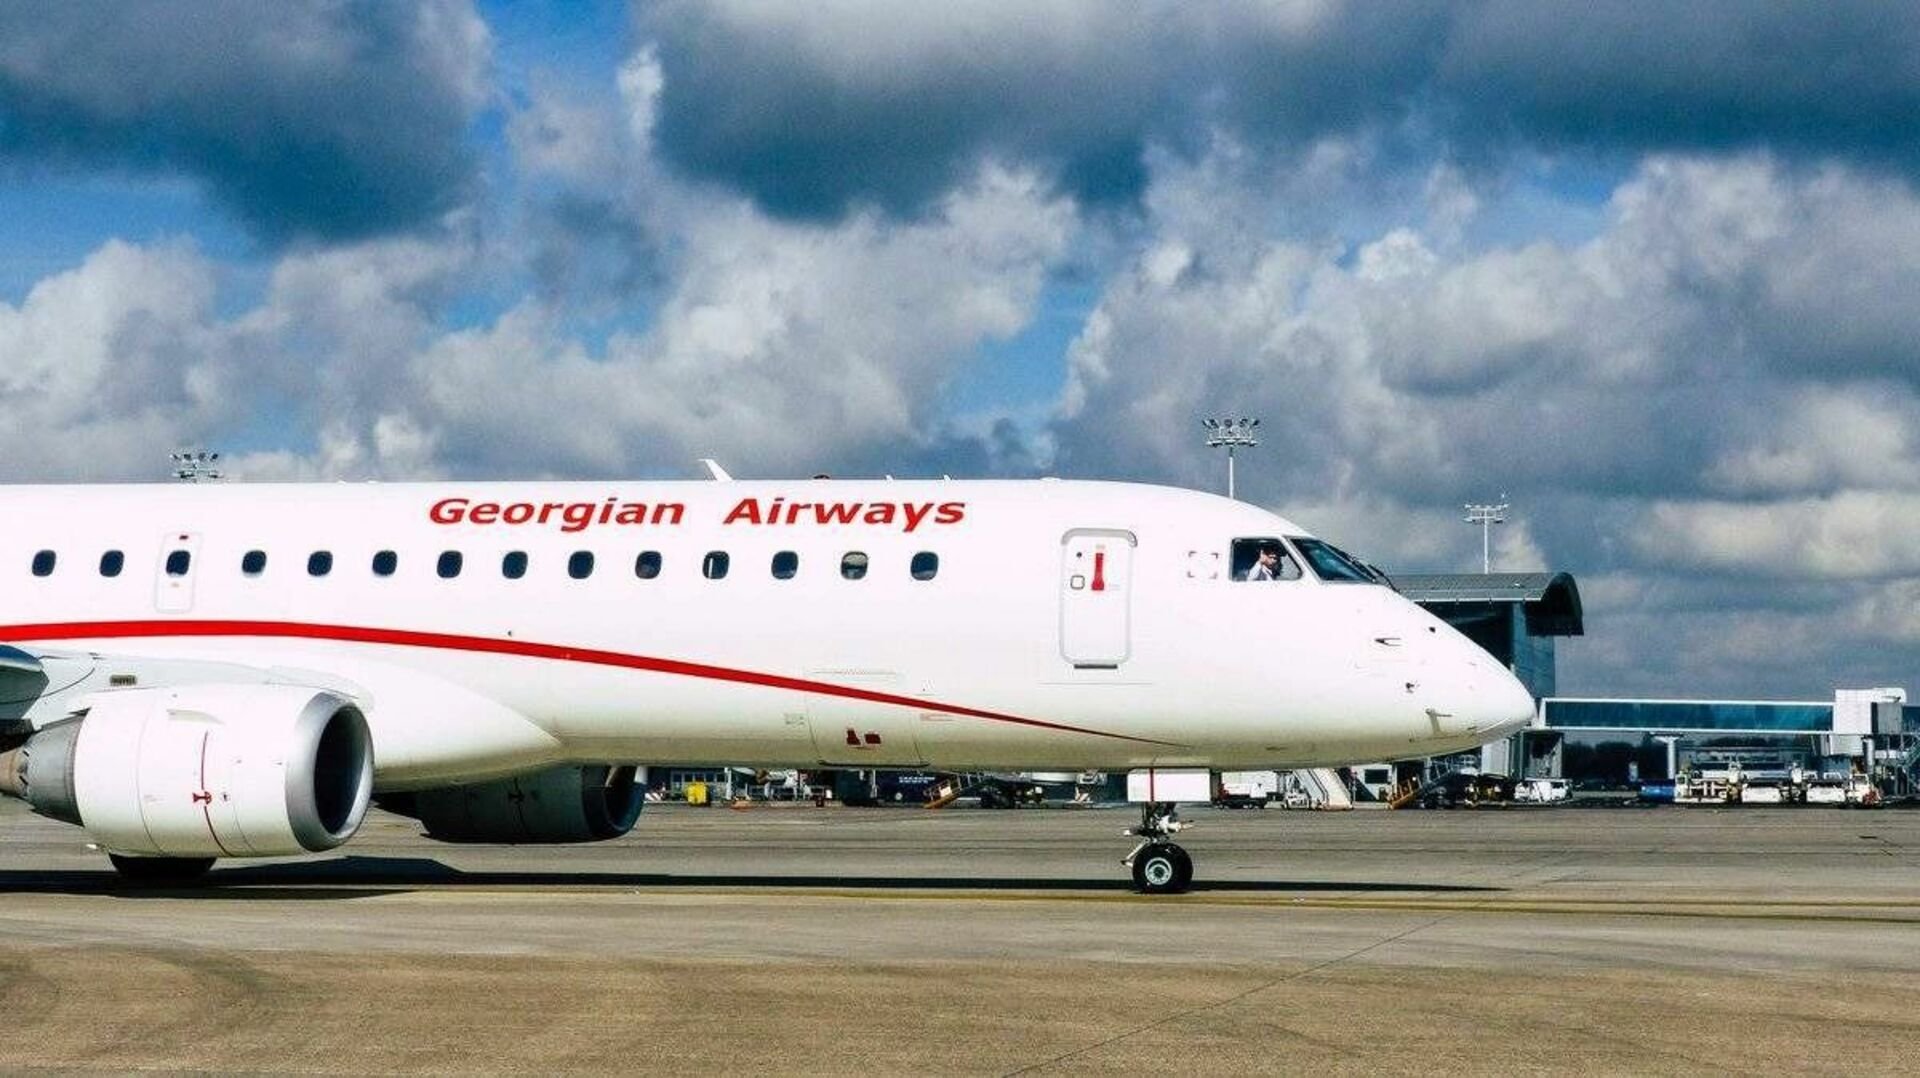 Georgian airways регистрация